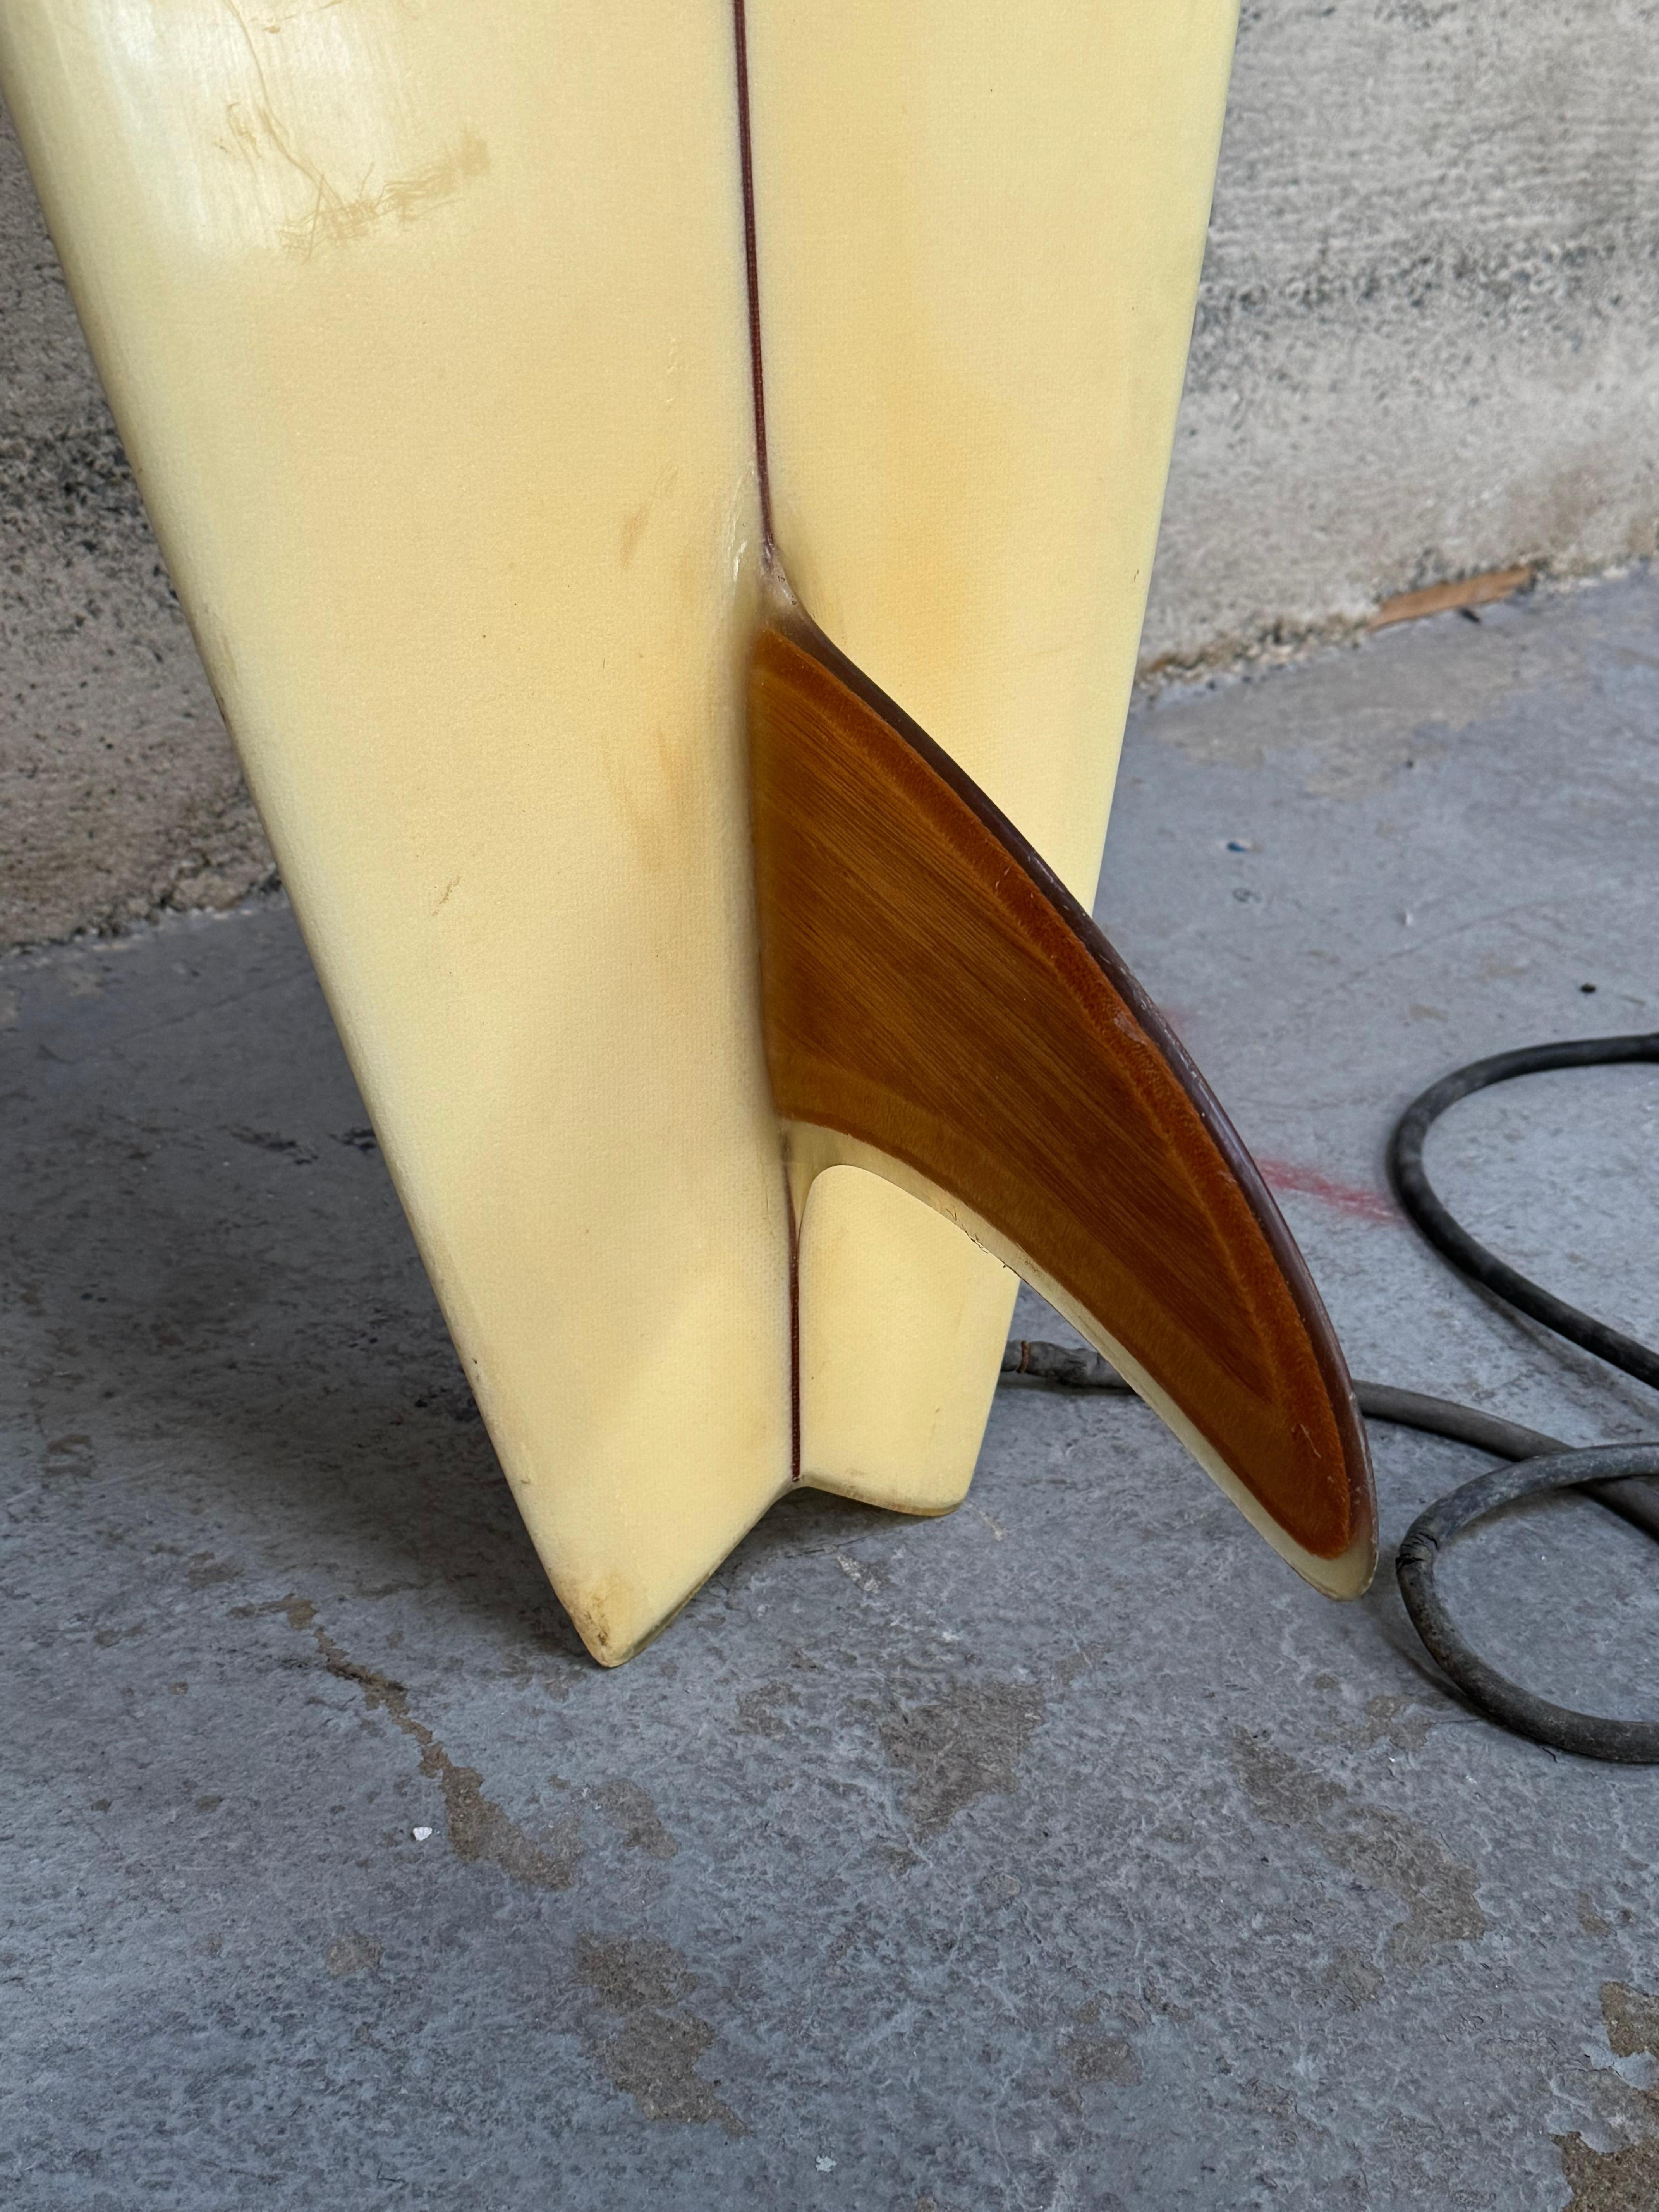 Hand-Crafted 1970s Joey Thomas Single Fin Surfboard an Santa Cruz Surf History Artifact For Sale